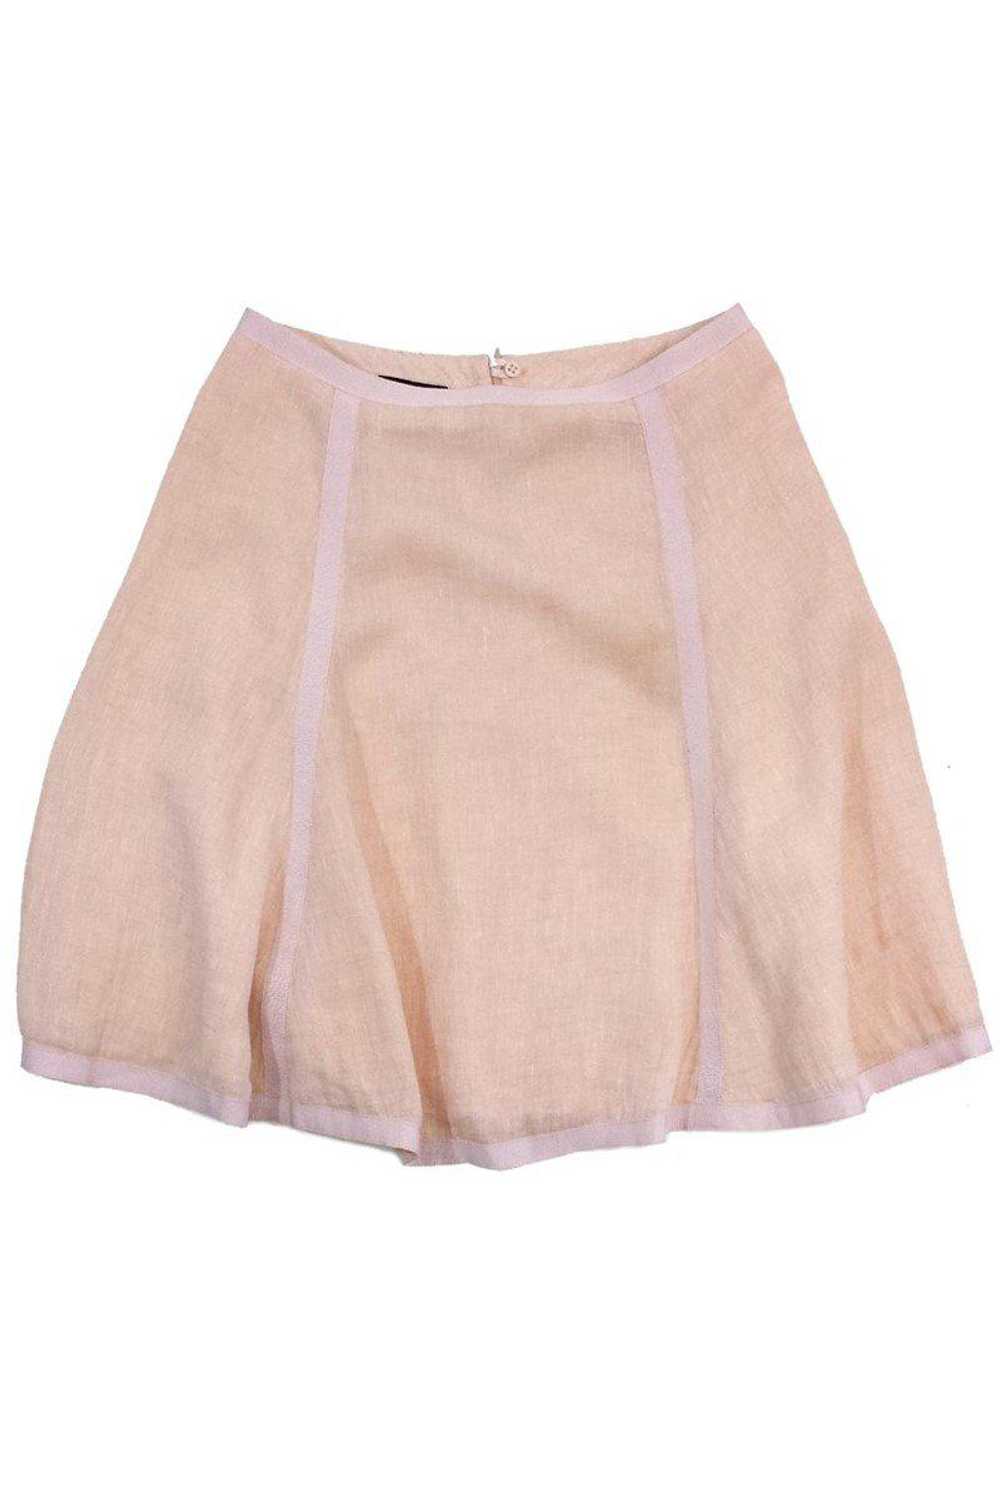 Emporio Armani - Peach Linen Skirt Sz 6 - image 1